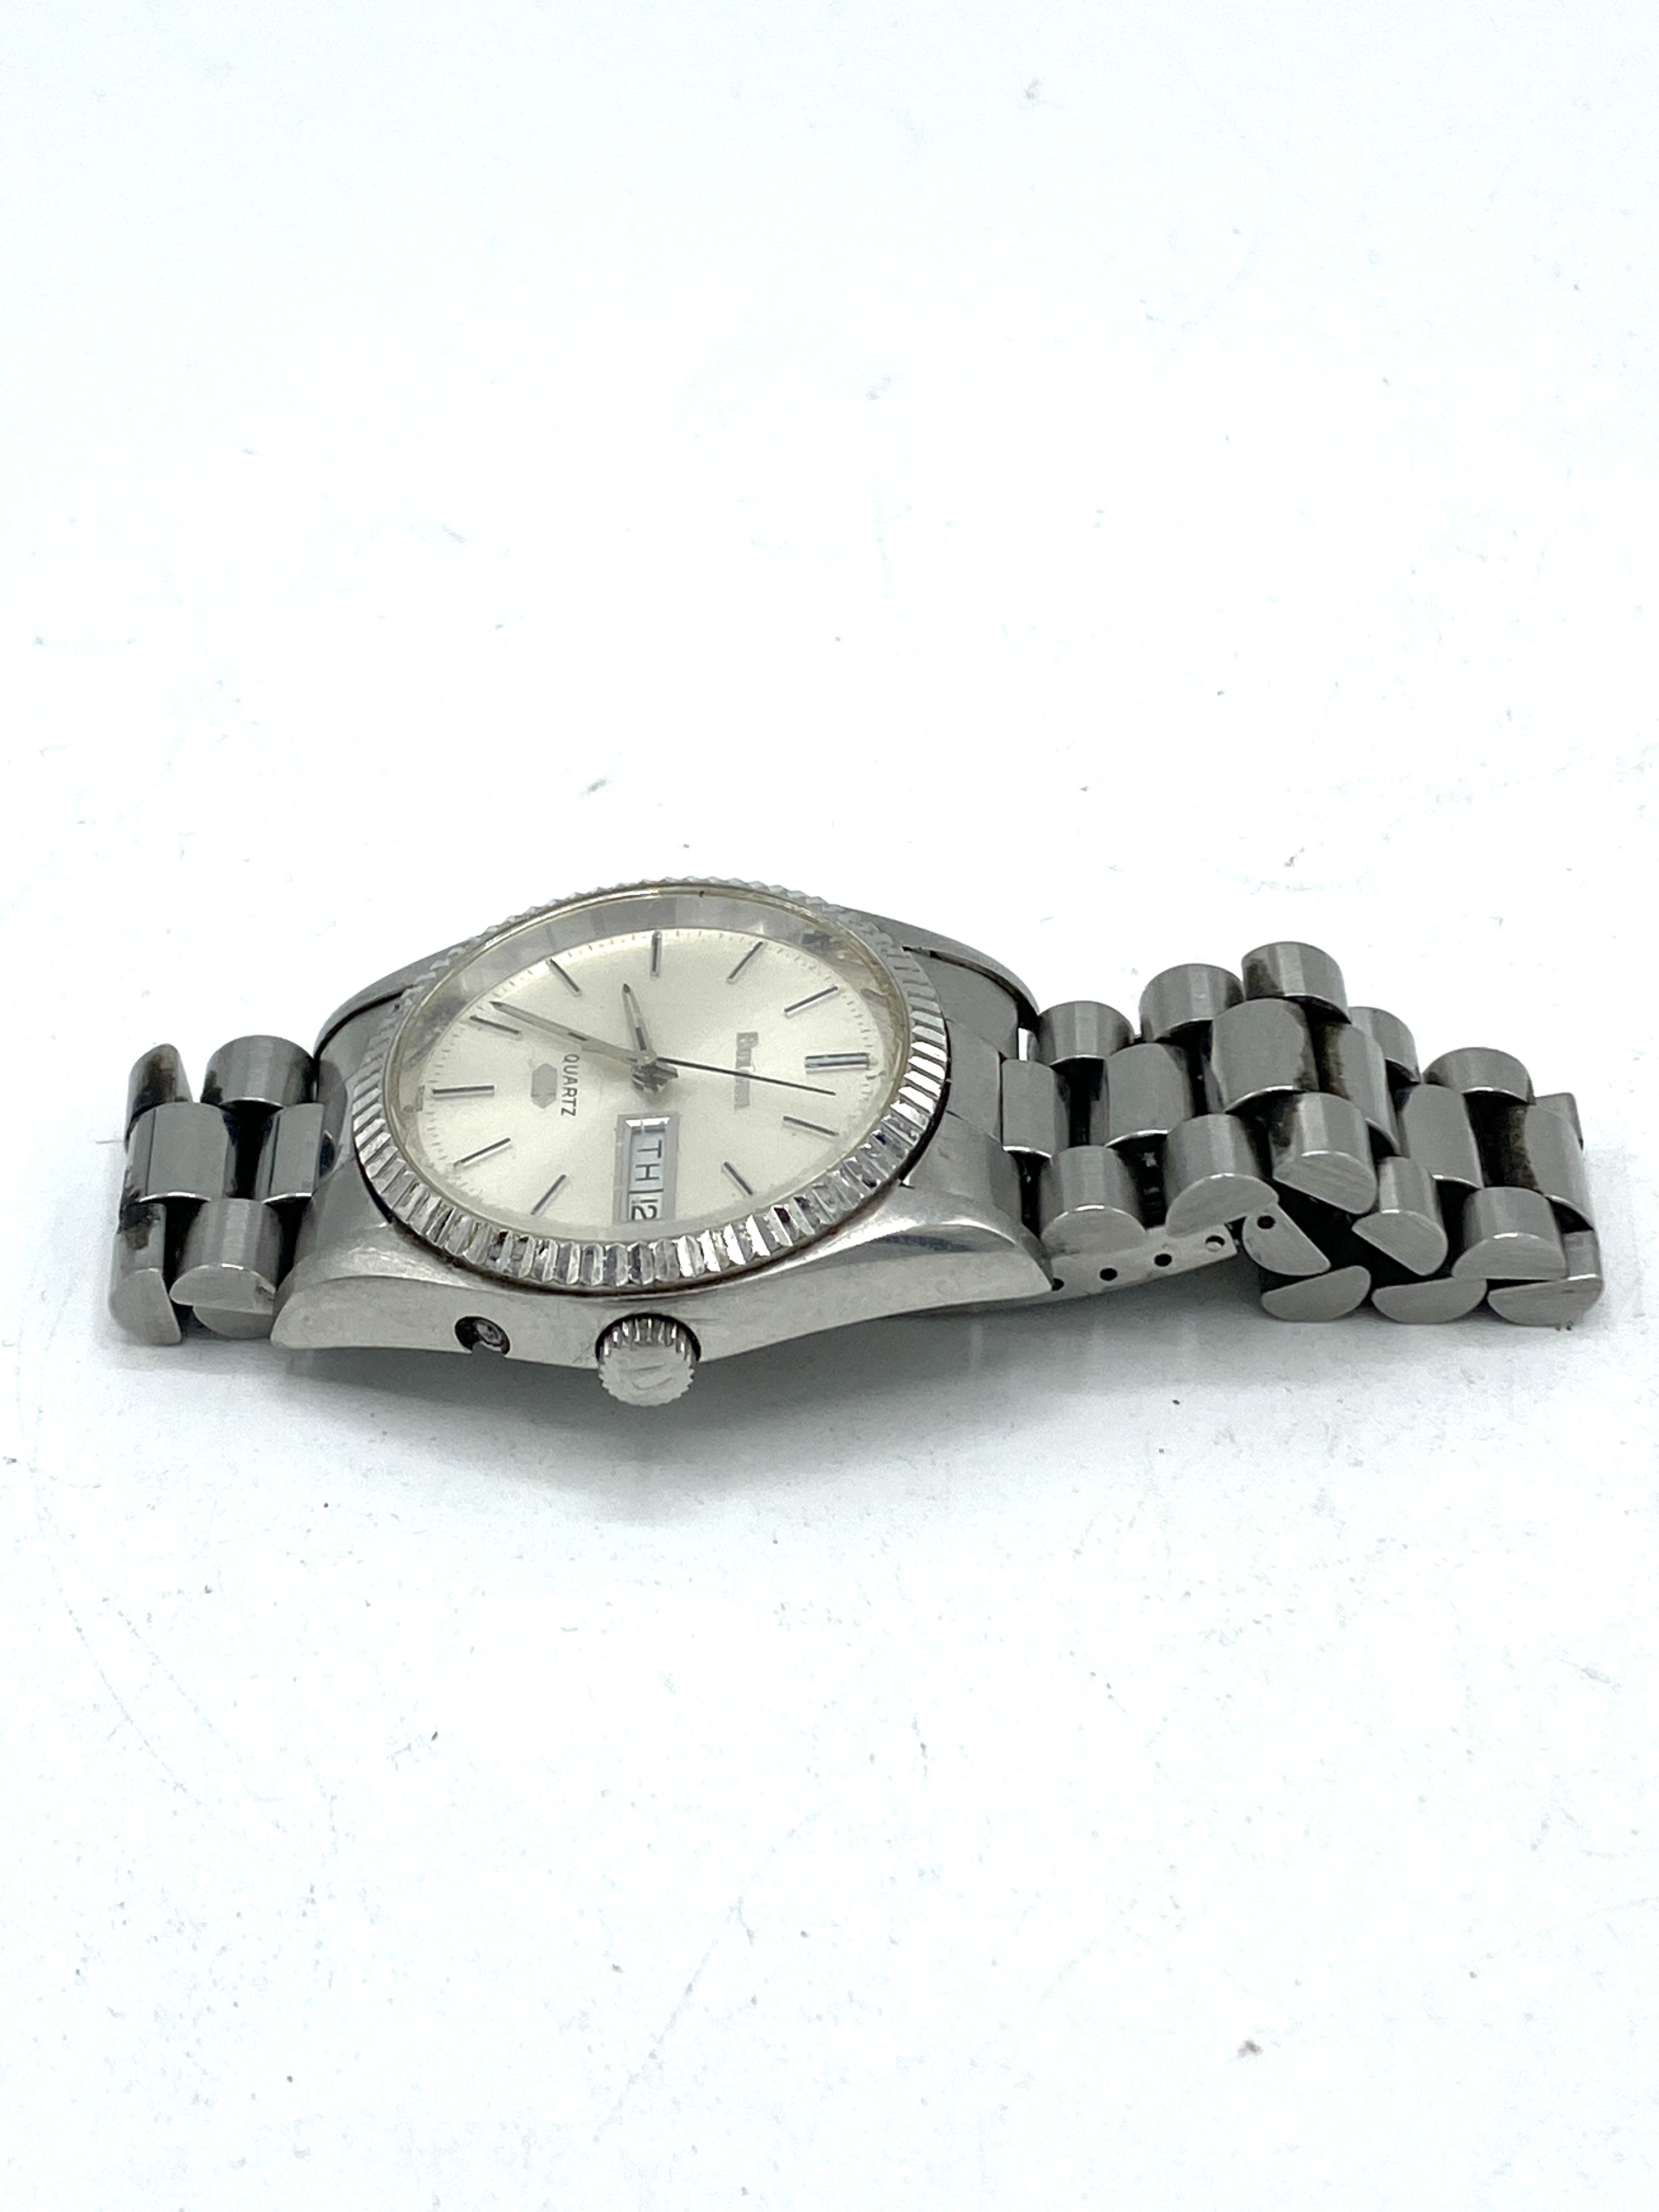 Gents stainless steel Bulova wristwatch - Image 3 of 4